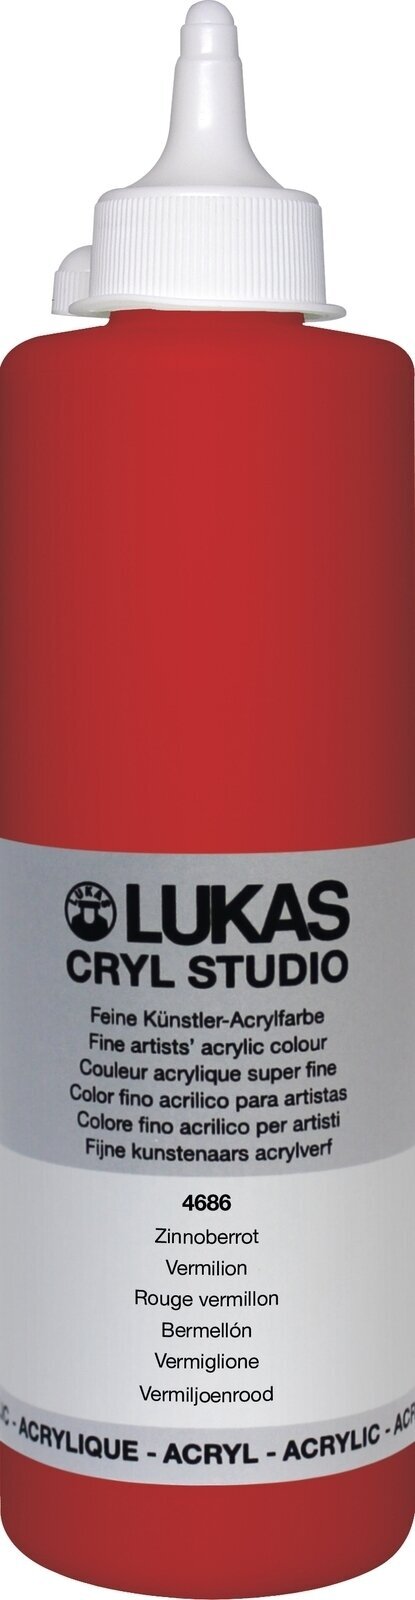 Acrylic Paint Lukas Cryl Studio Acrylic Paint 500 ml Vermilion